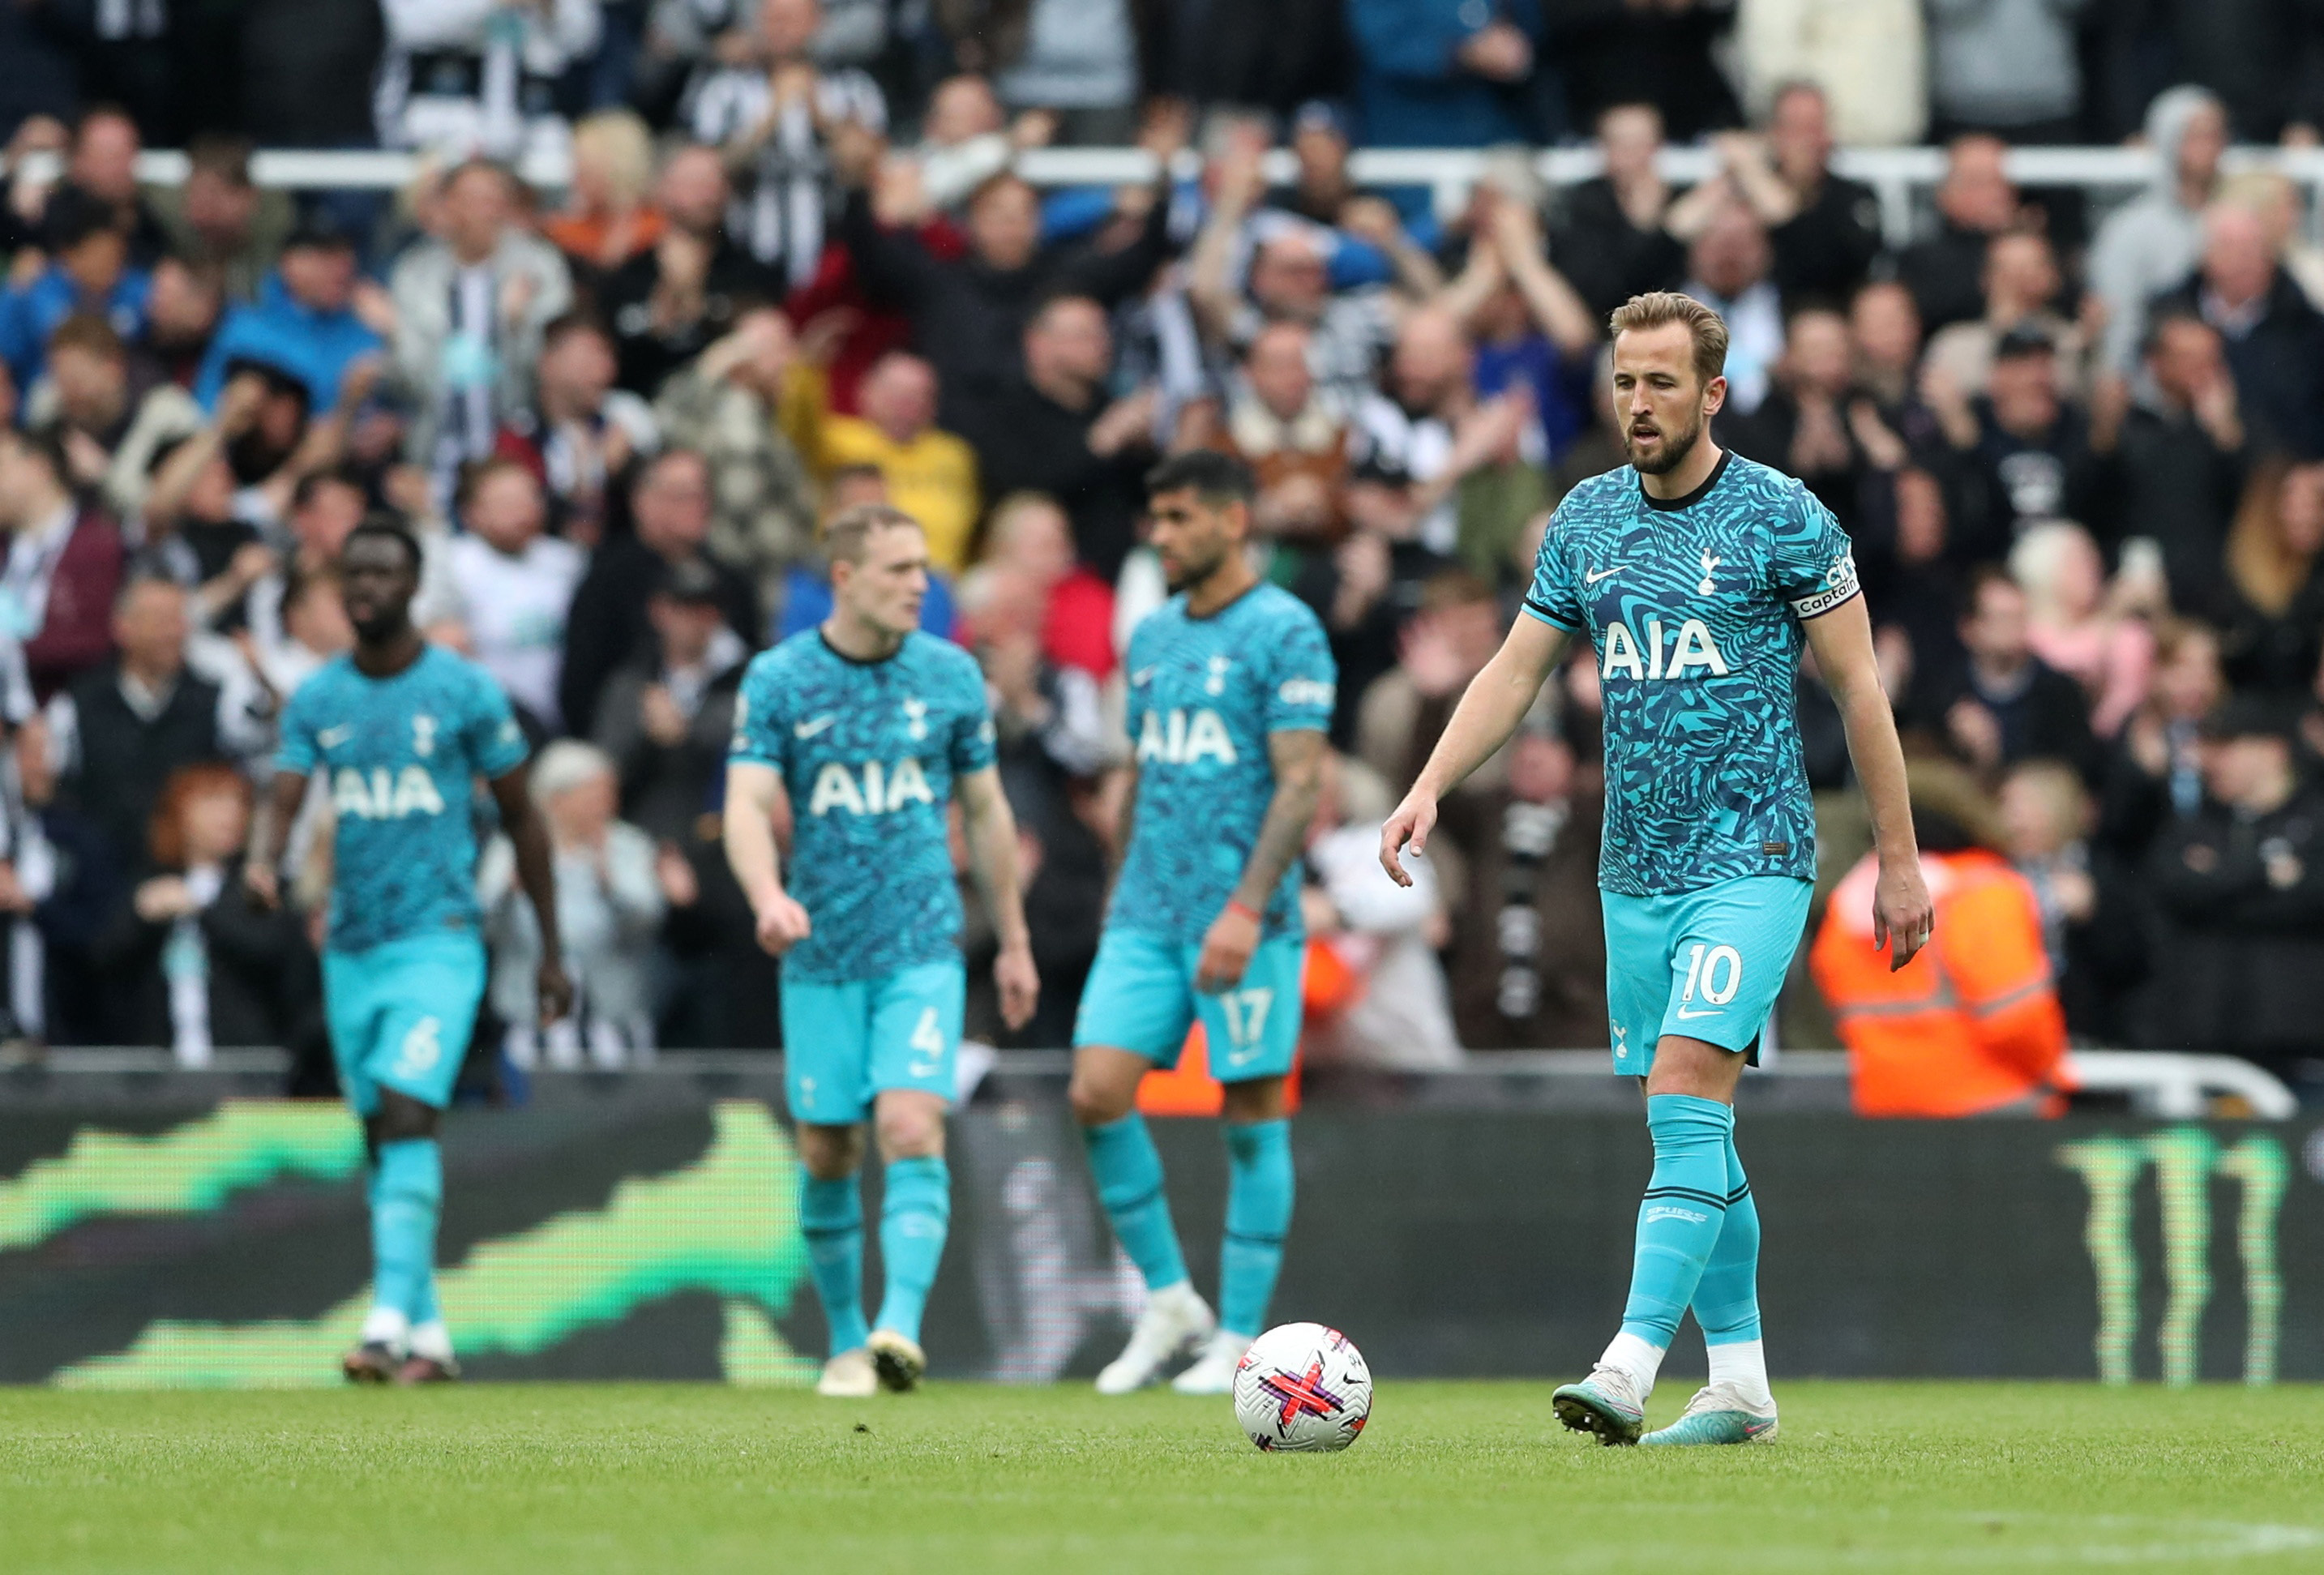 Tottenham need to extract revenge against Newcastle for the 6-1 loss last season.